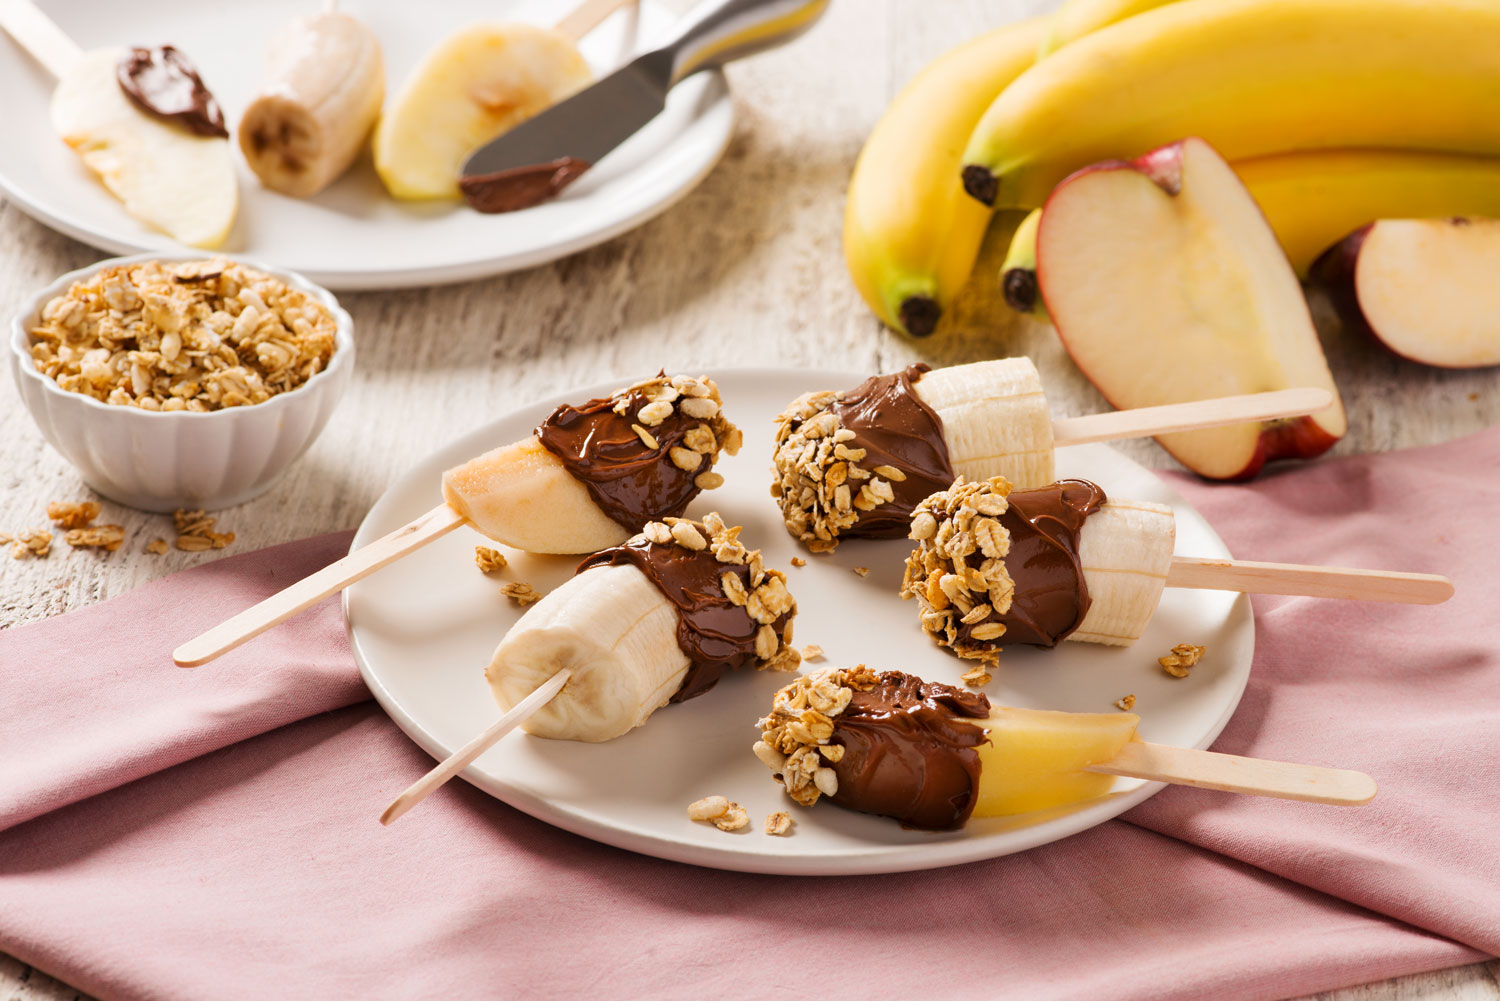 Apple and Banana Pops with Nutella® hazelnut spread